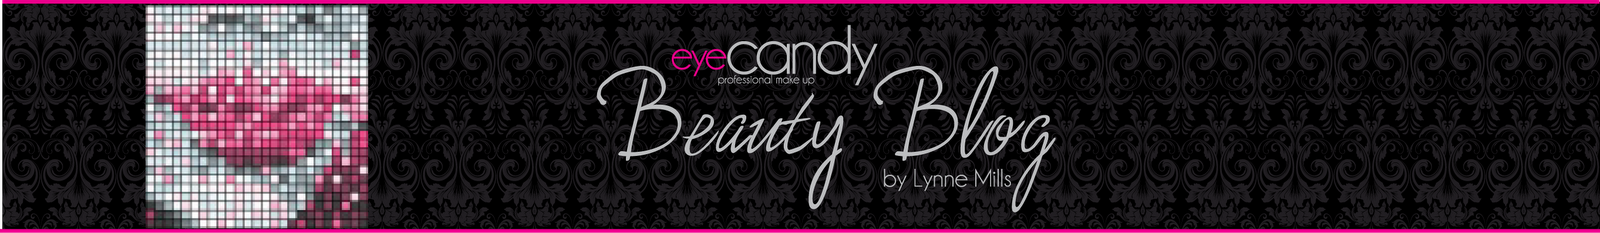 EyeCandy Make-Up & Beauty Blog